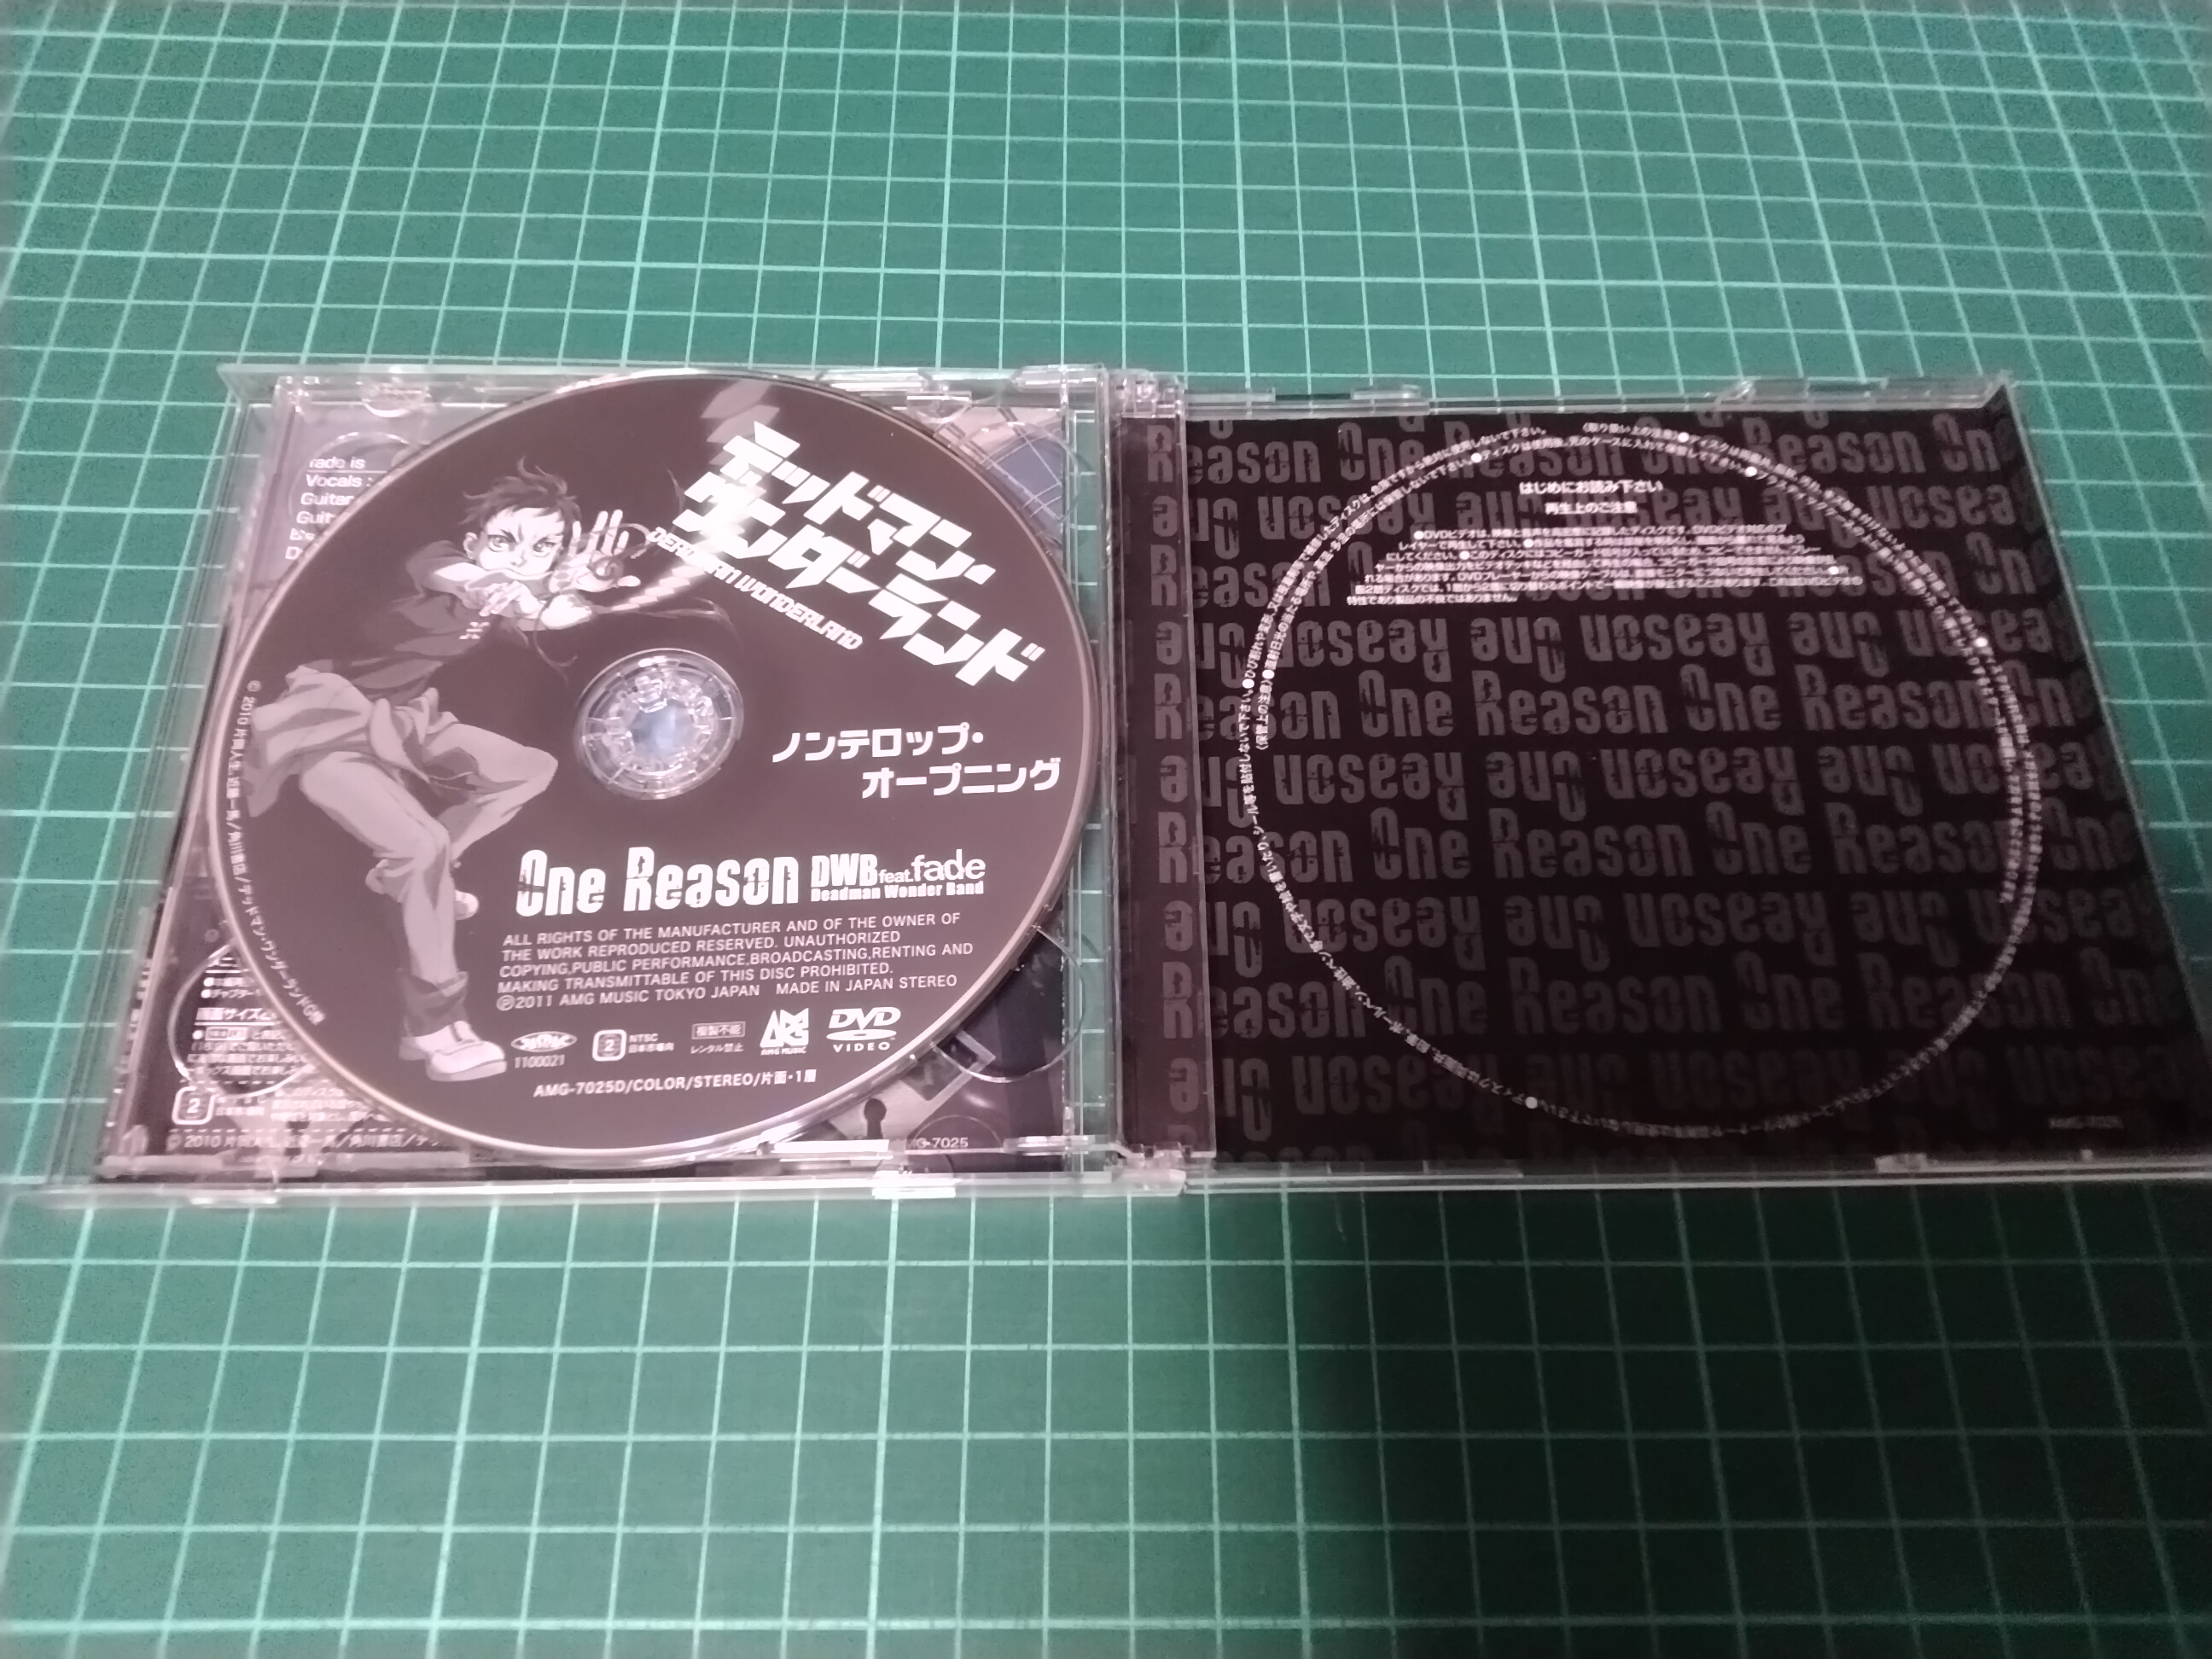 CD+DVD] 限定盤死囚樂園DEADMAN WONDERLAND OP 片頭曲One Reason fade 